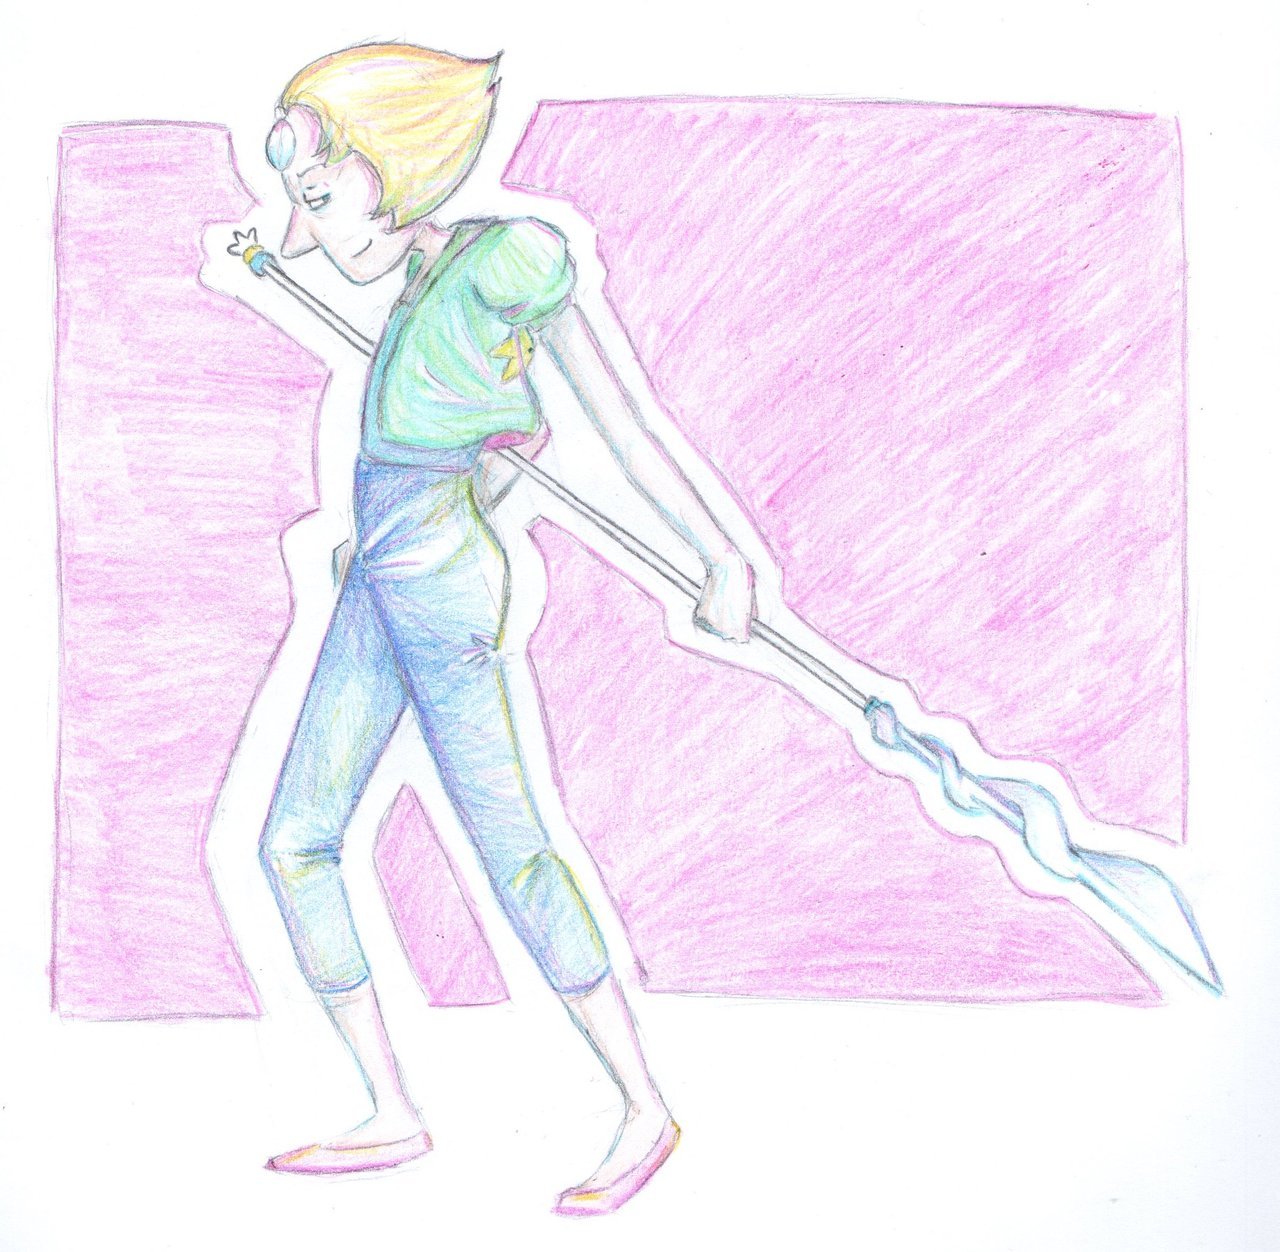 I sketched a Pearl!